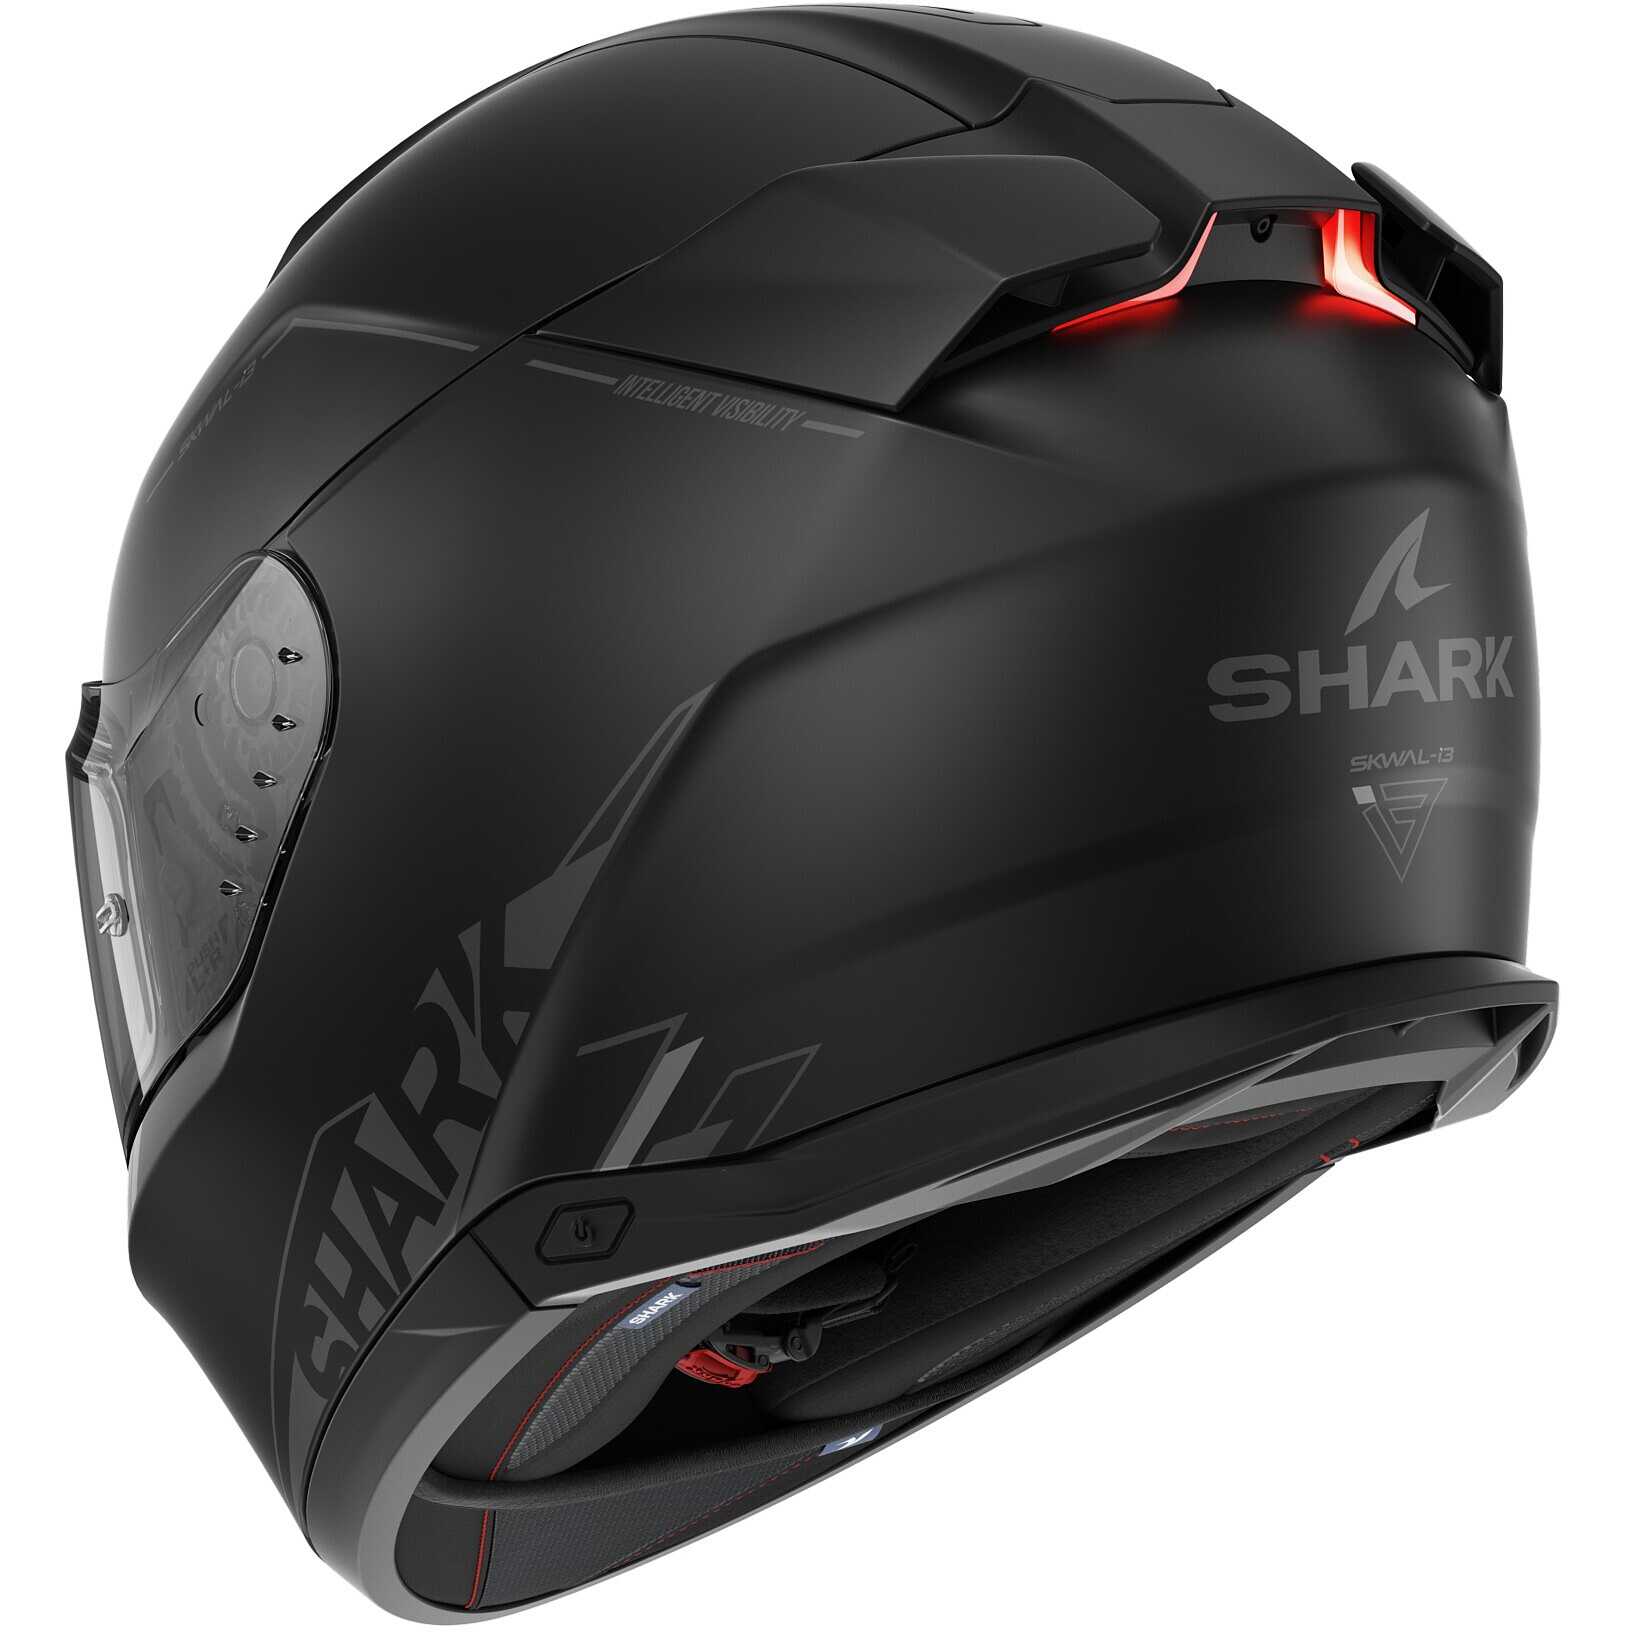 Full Face Motorcycle Helmet With LED Shark SKWAL i3 BLANK SP MAT Black  Anthracite Black For Sale Online 